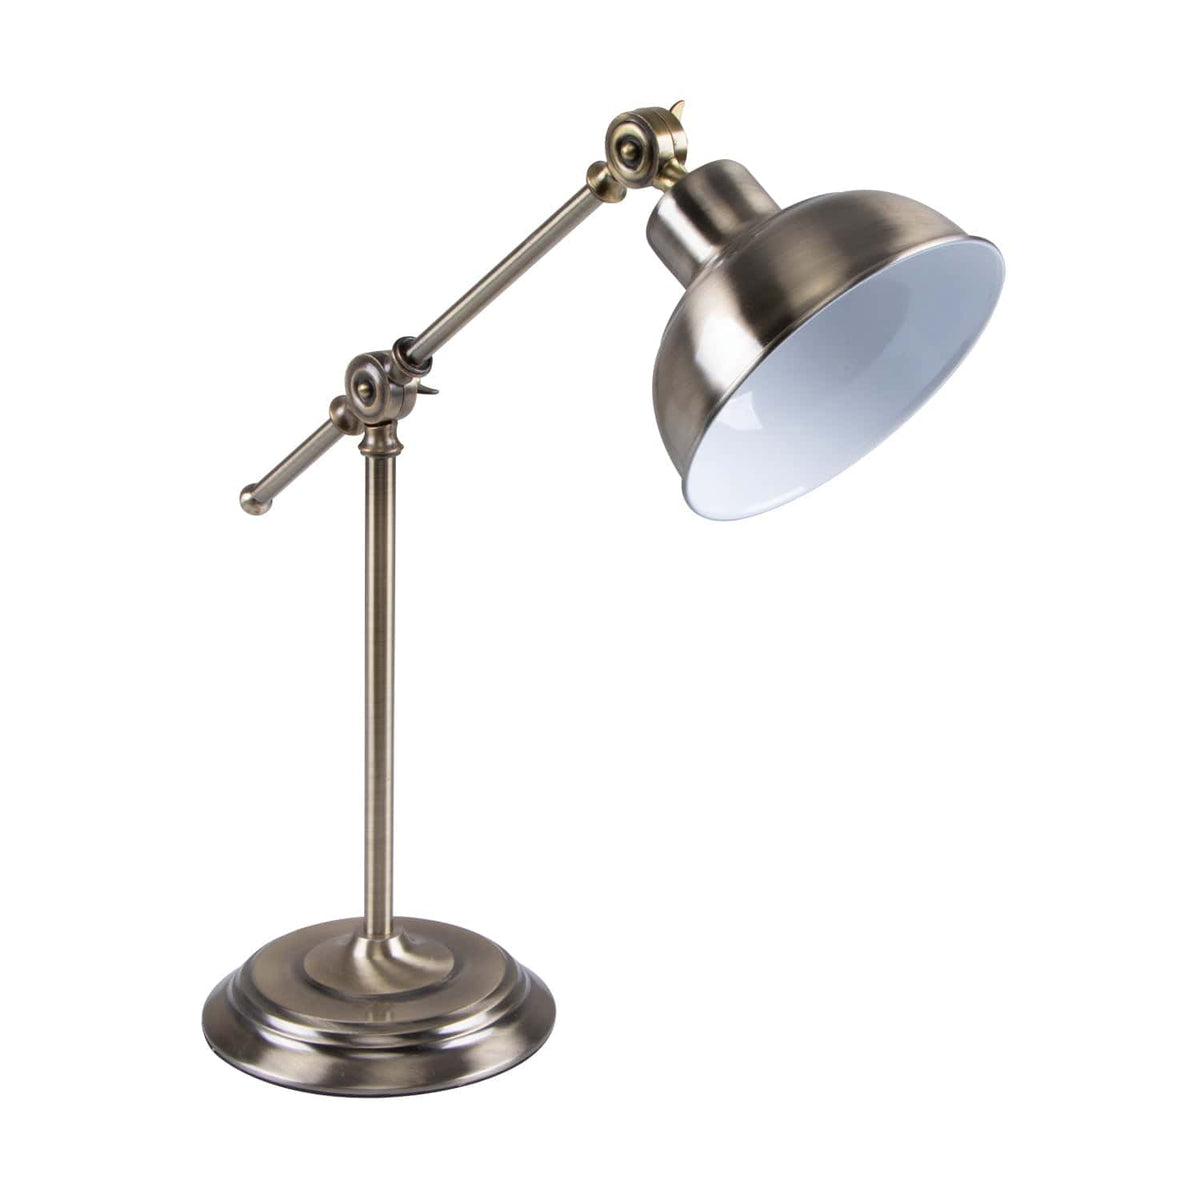 Domus Lighting Desk Lamps ANTIQUE BRASS DOMUS TINLEY-DL DESK LAMP 1 XE27 240V Lights-For-You 22525